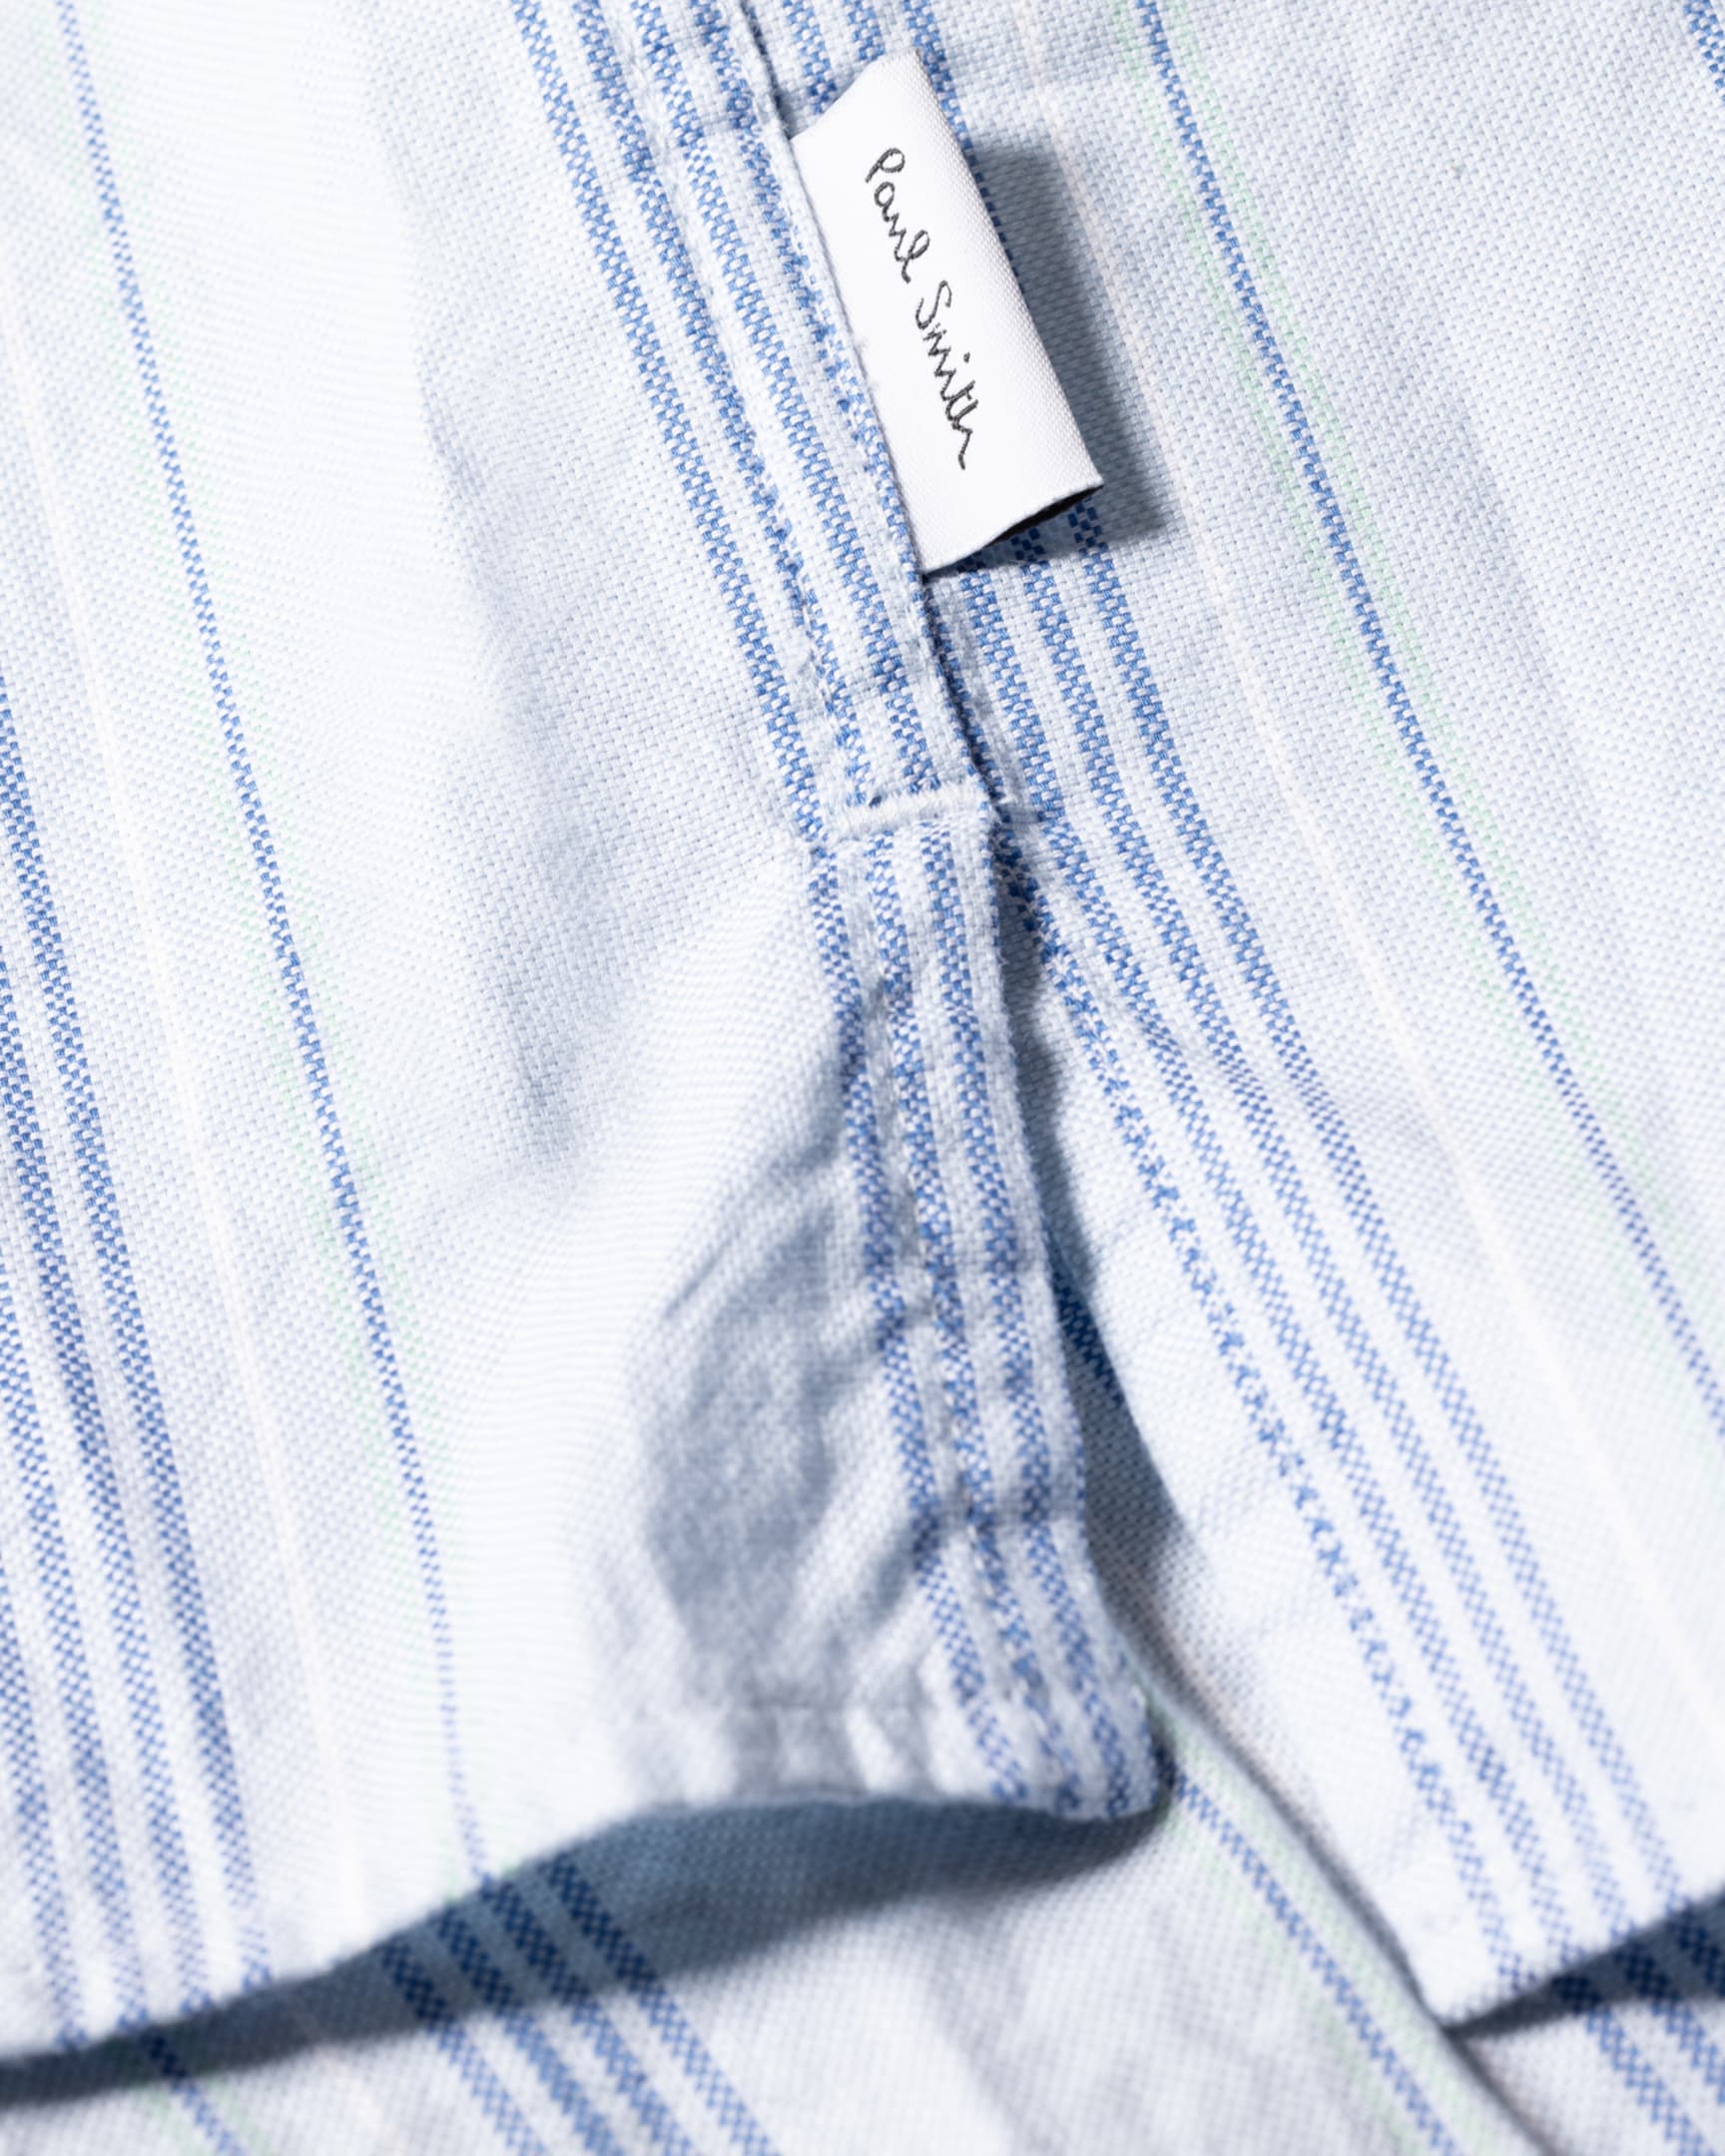 Detail View - Light Blue Stripe Organic Cotton Short-Sleeve Shirt Paul Smith